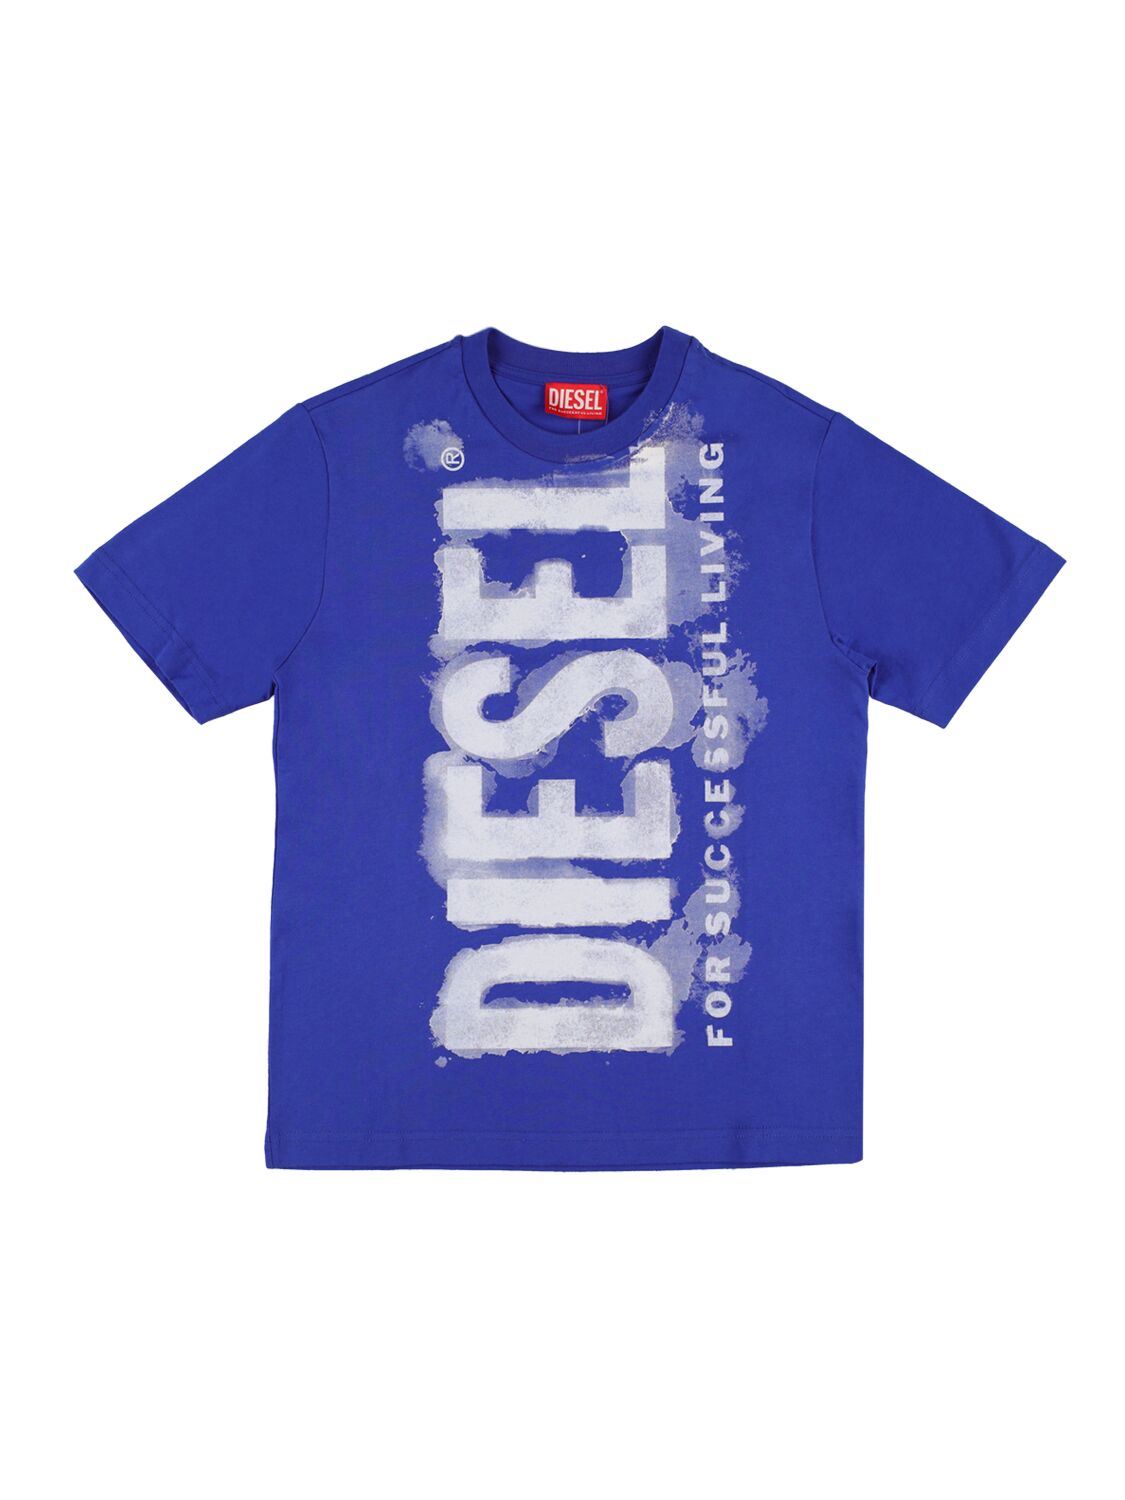 Diesel Kids' Washed Logo Print Cotton Jersey T-shirt In Royal Blue